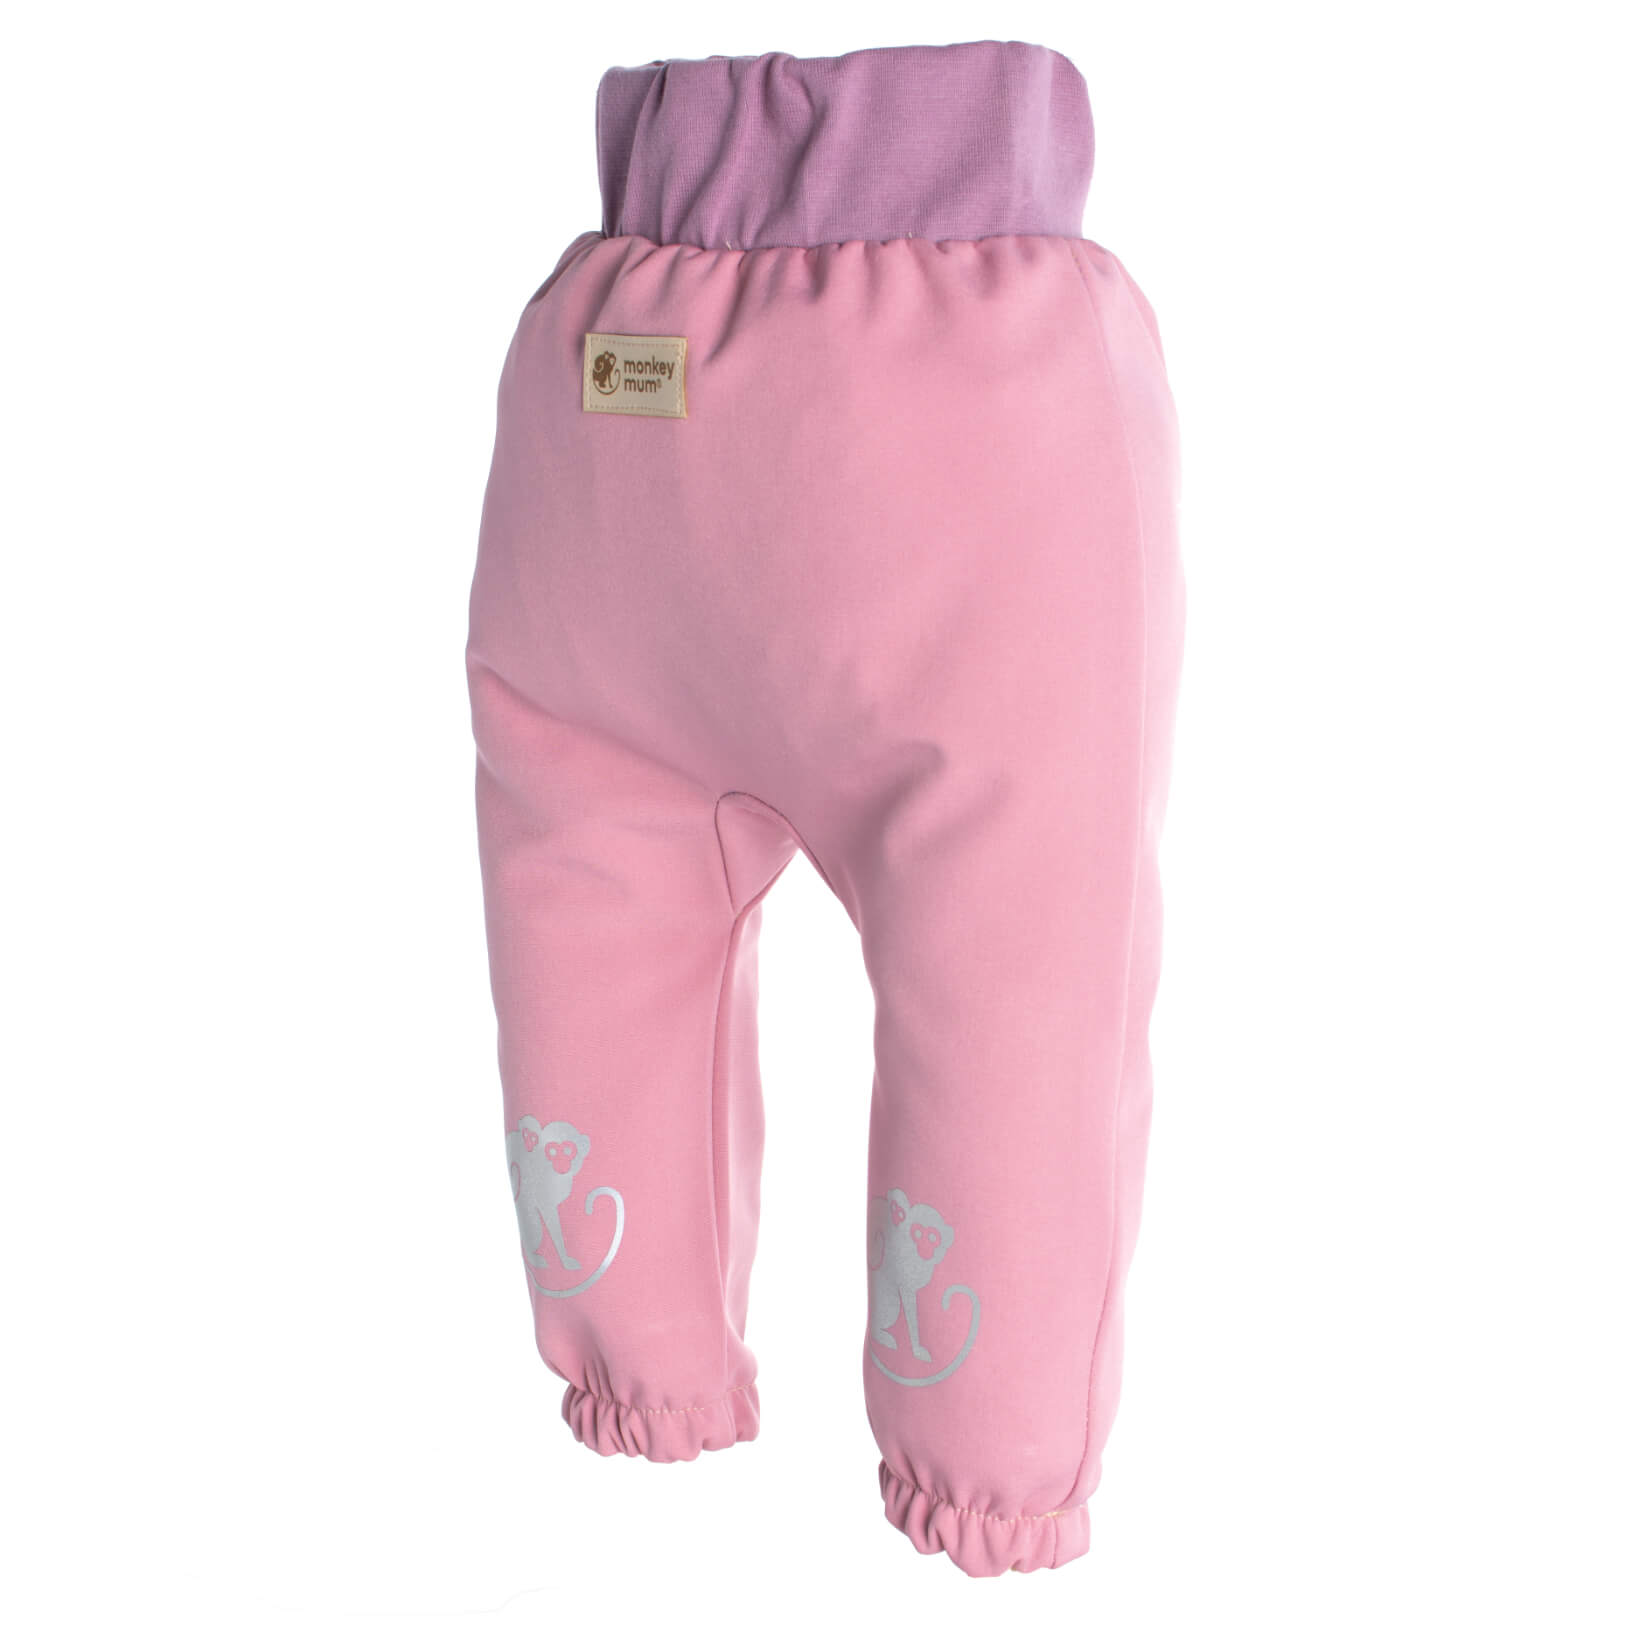 Pantaloni Softshell Per Bambini Monkey Mum® Con Membrana - Zucchero Filato 80